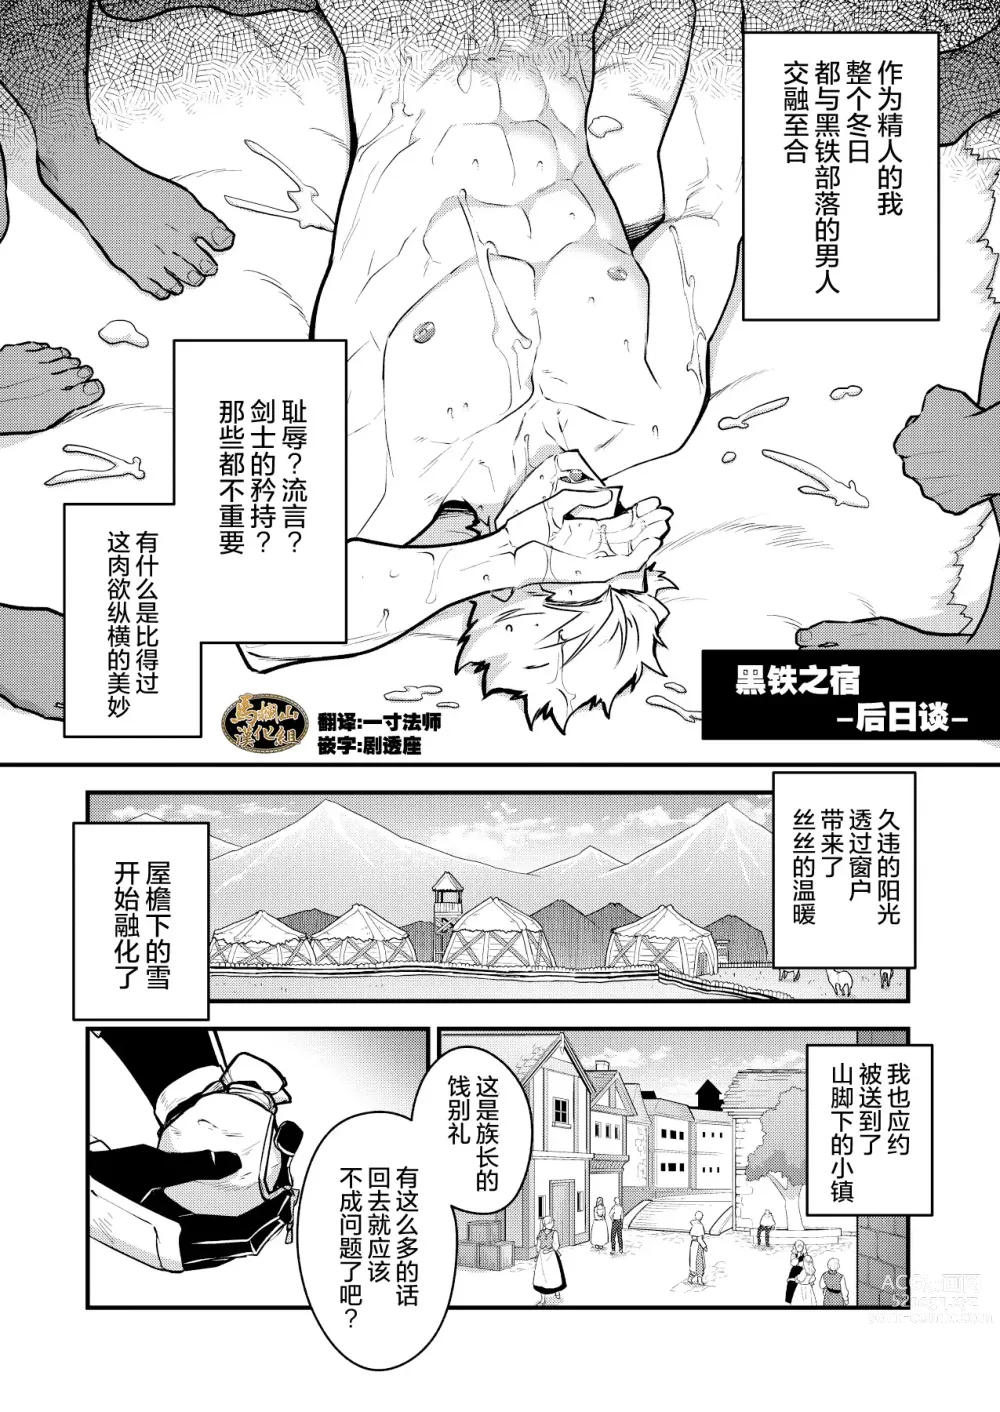 Page 1 of doujinshi 黑铁之宿 日后谈